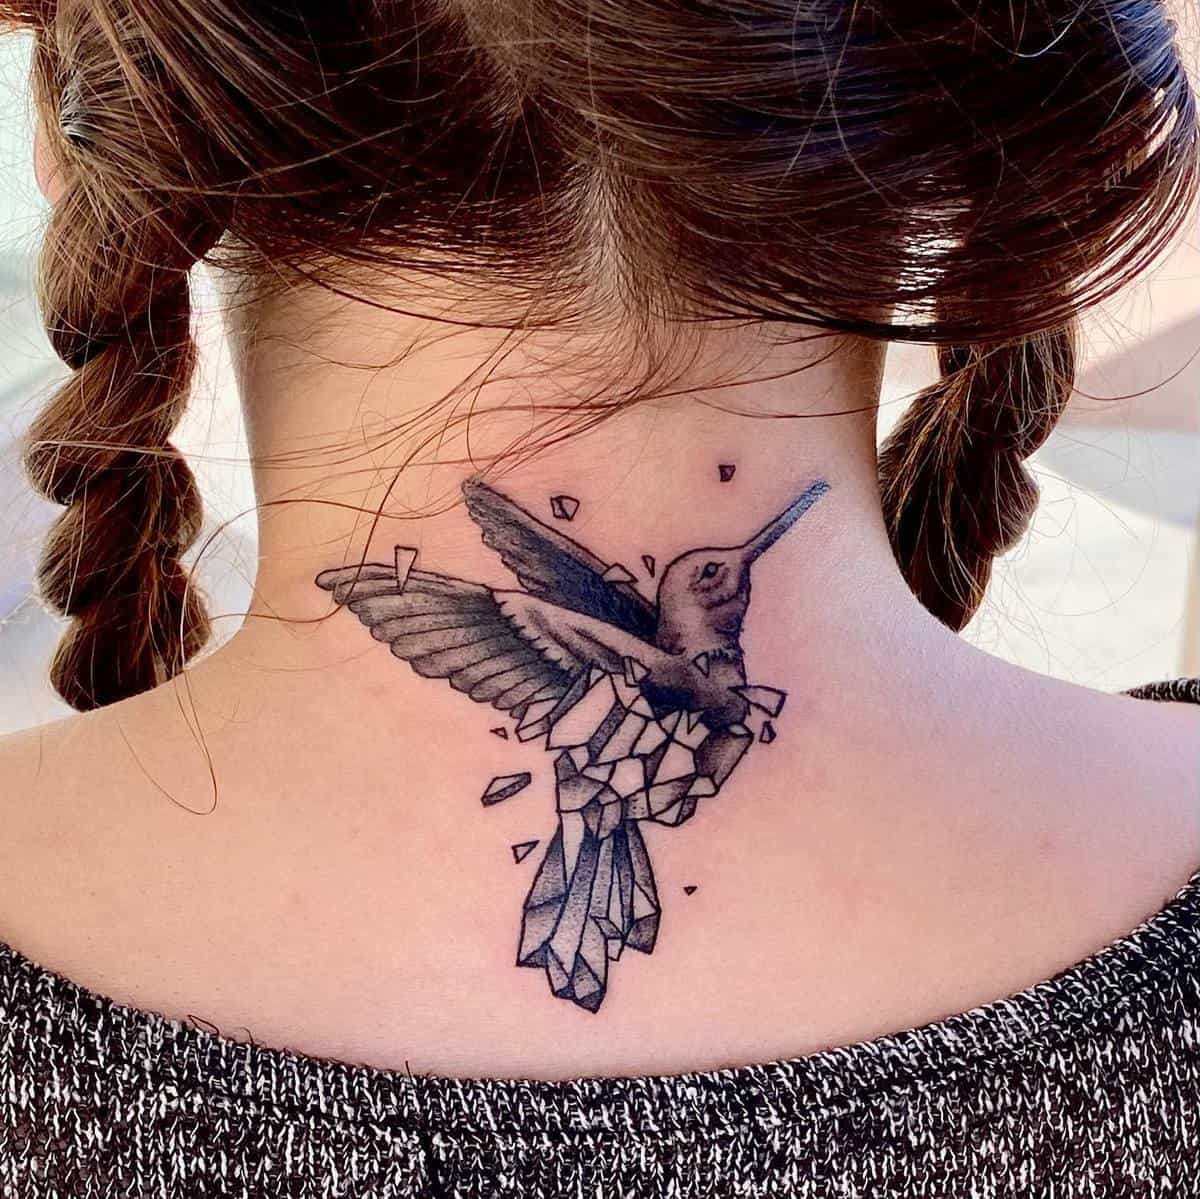 Hummingbird Tattoo Meaning - What do Hummingbirds Symbolize?